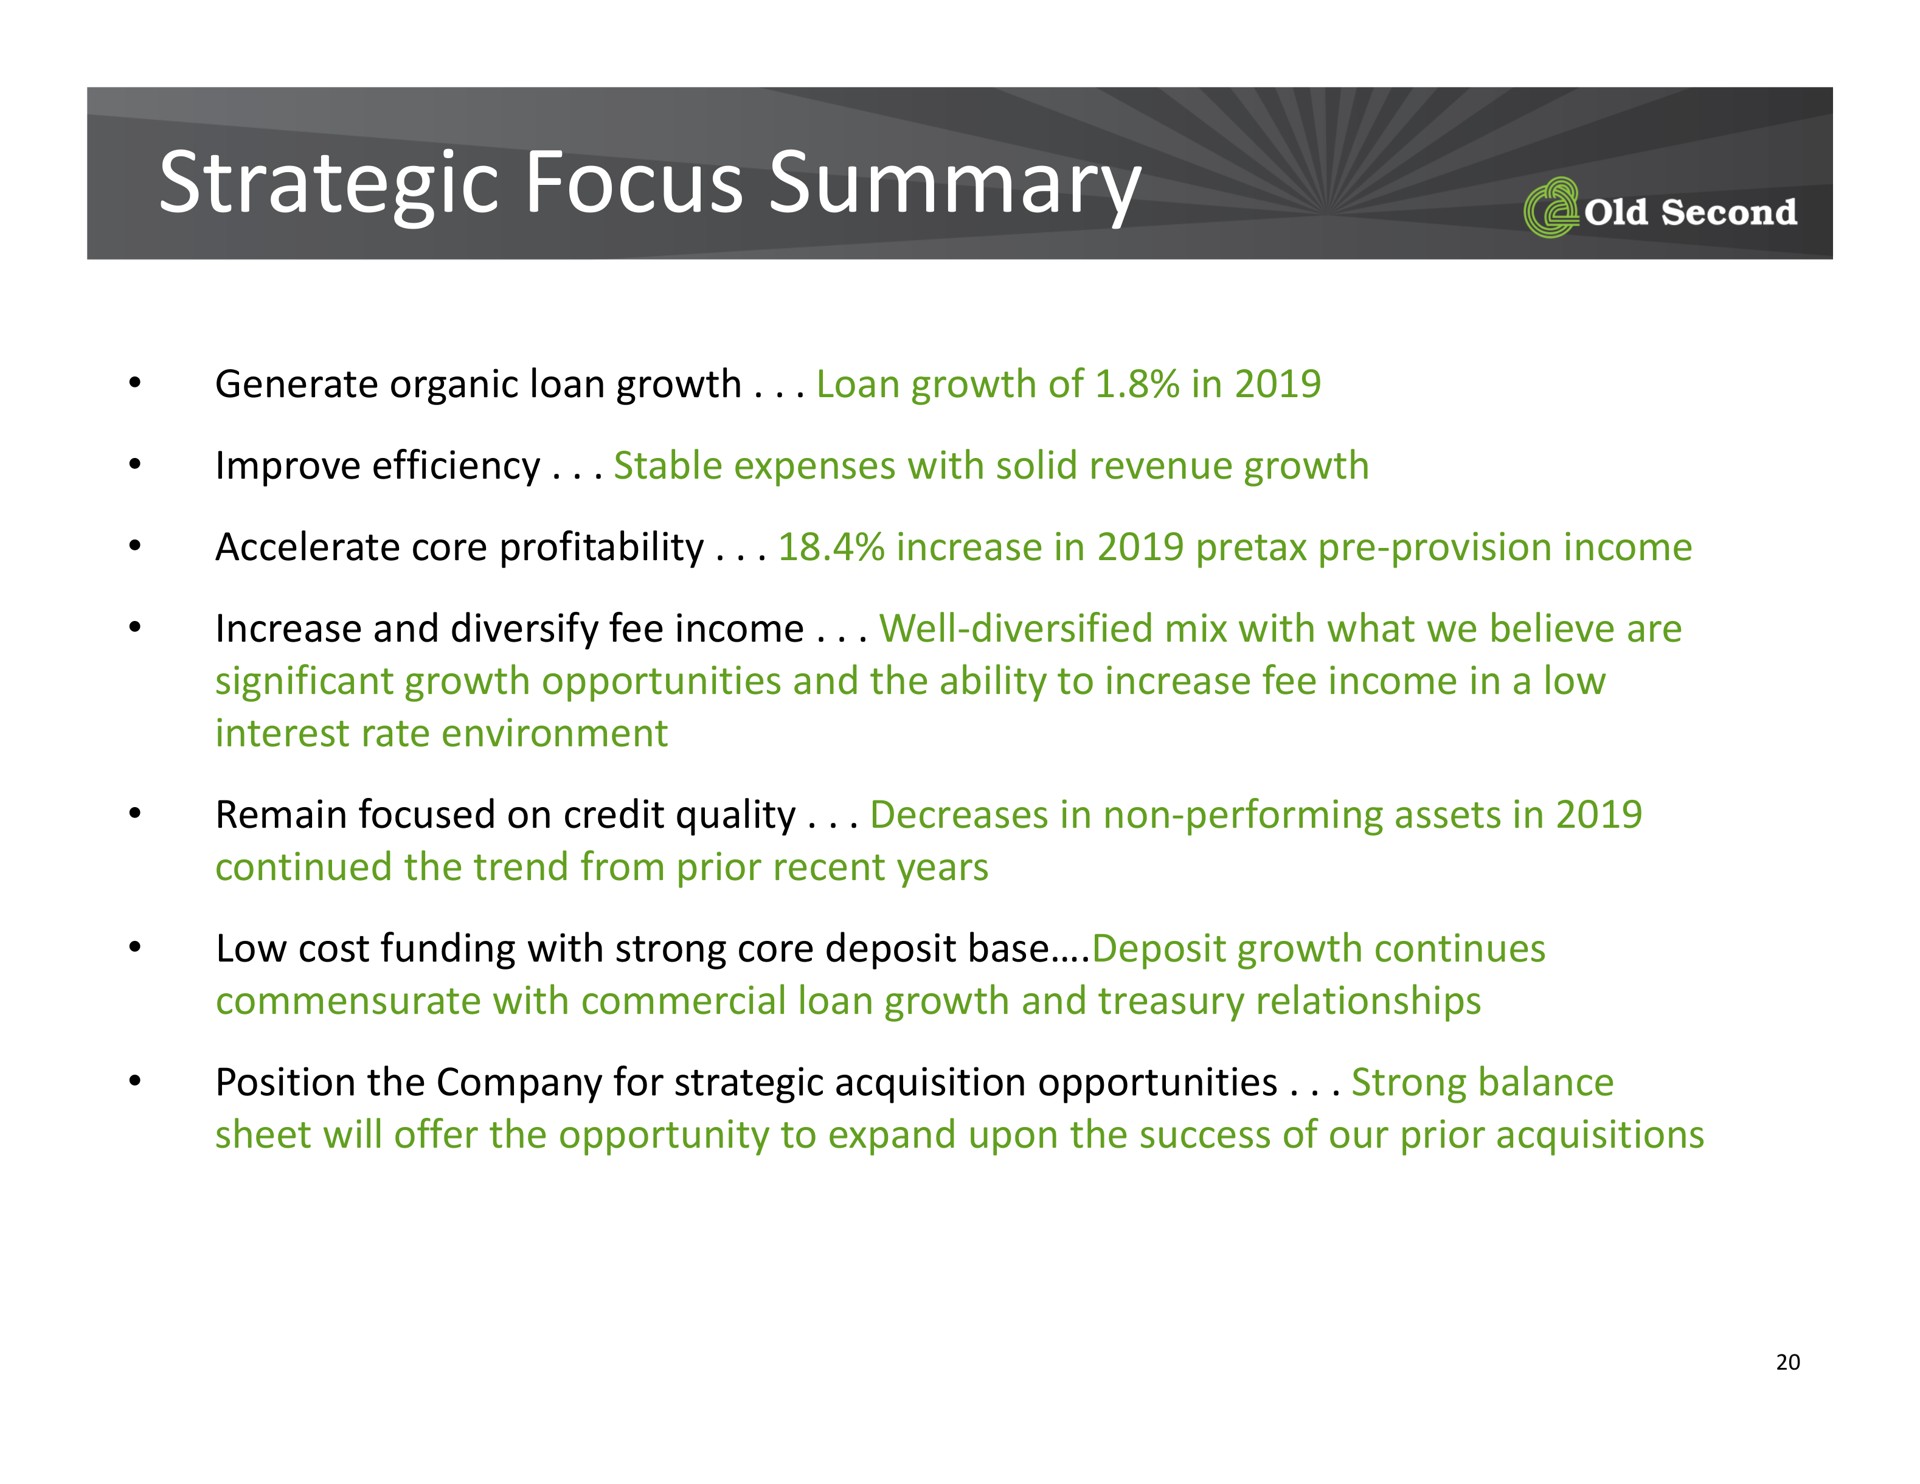 strategic focus summary | Old Second Bancorp